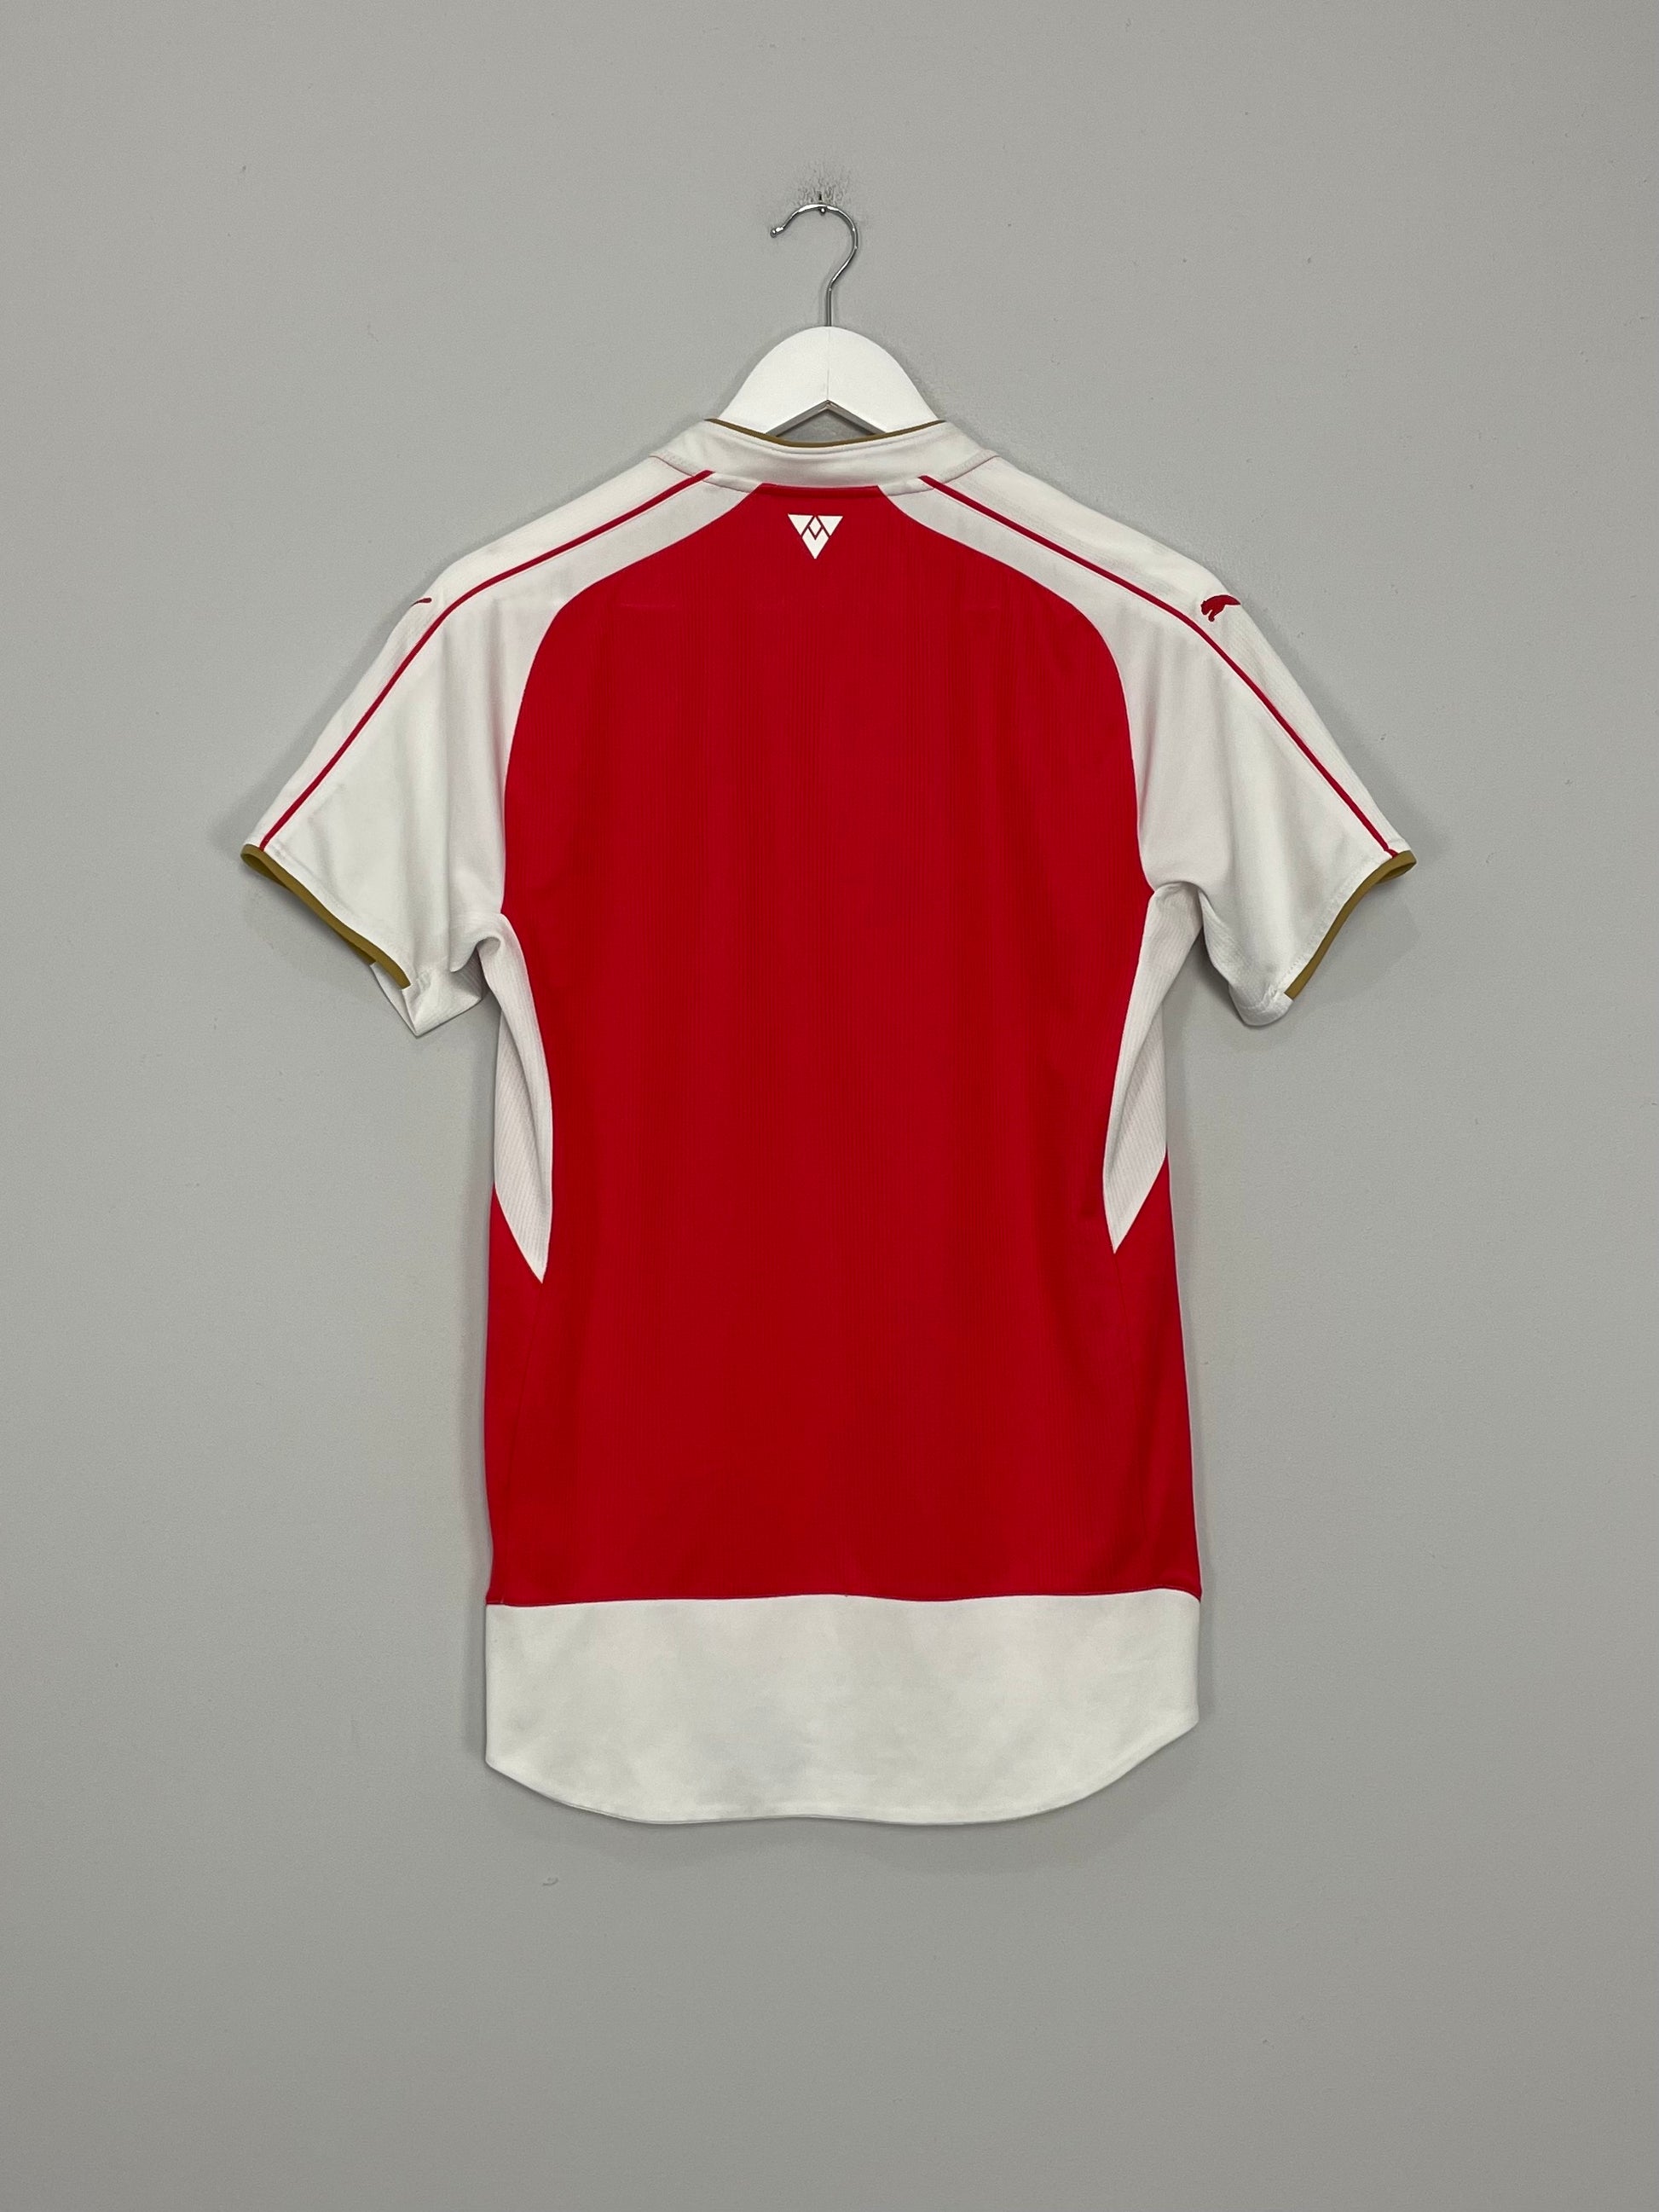 Classic Arsenal Football Shirt